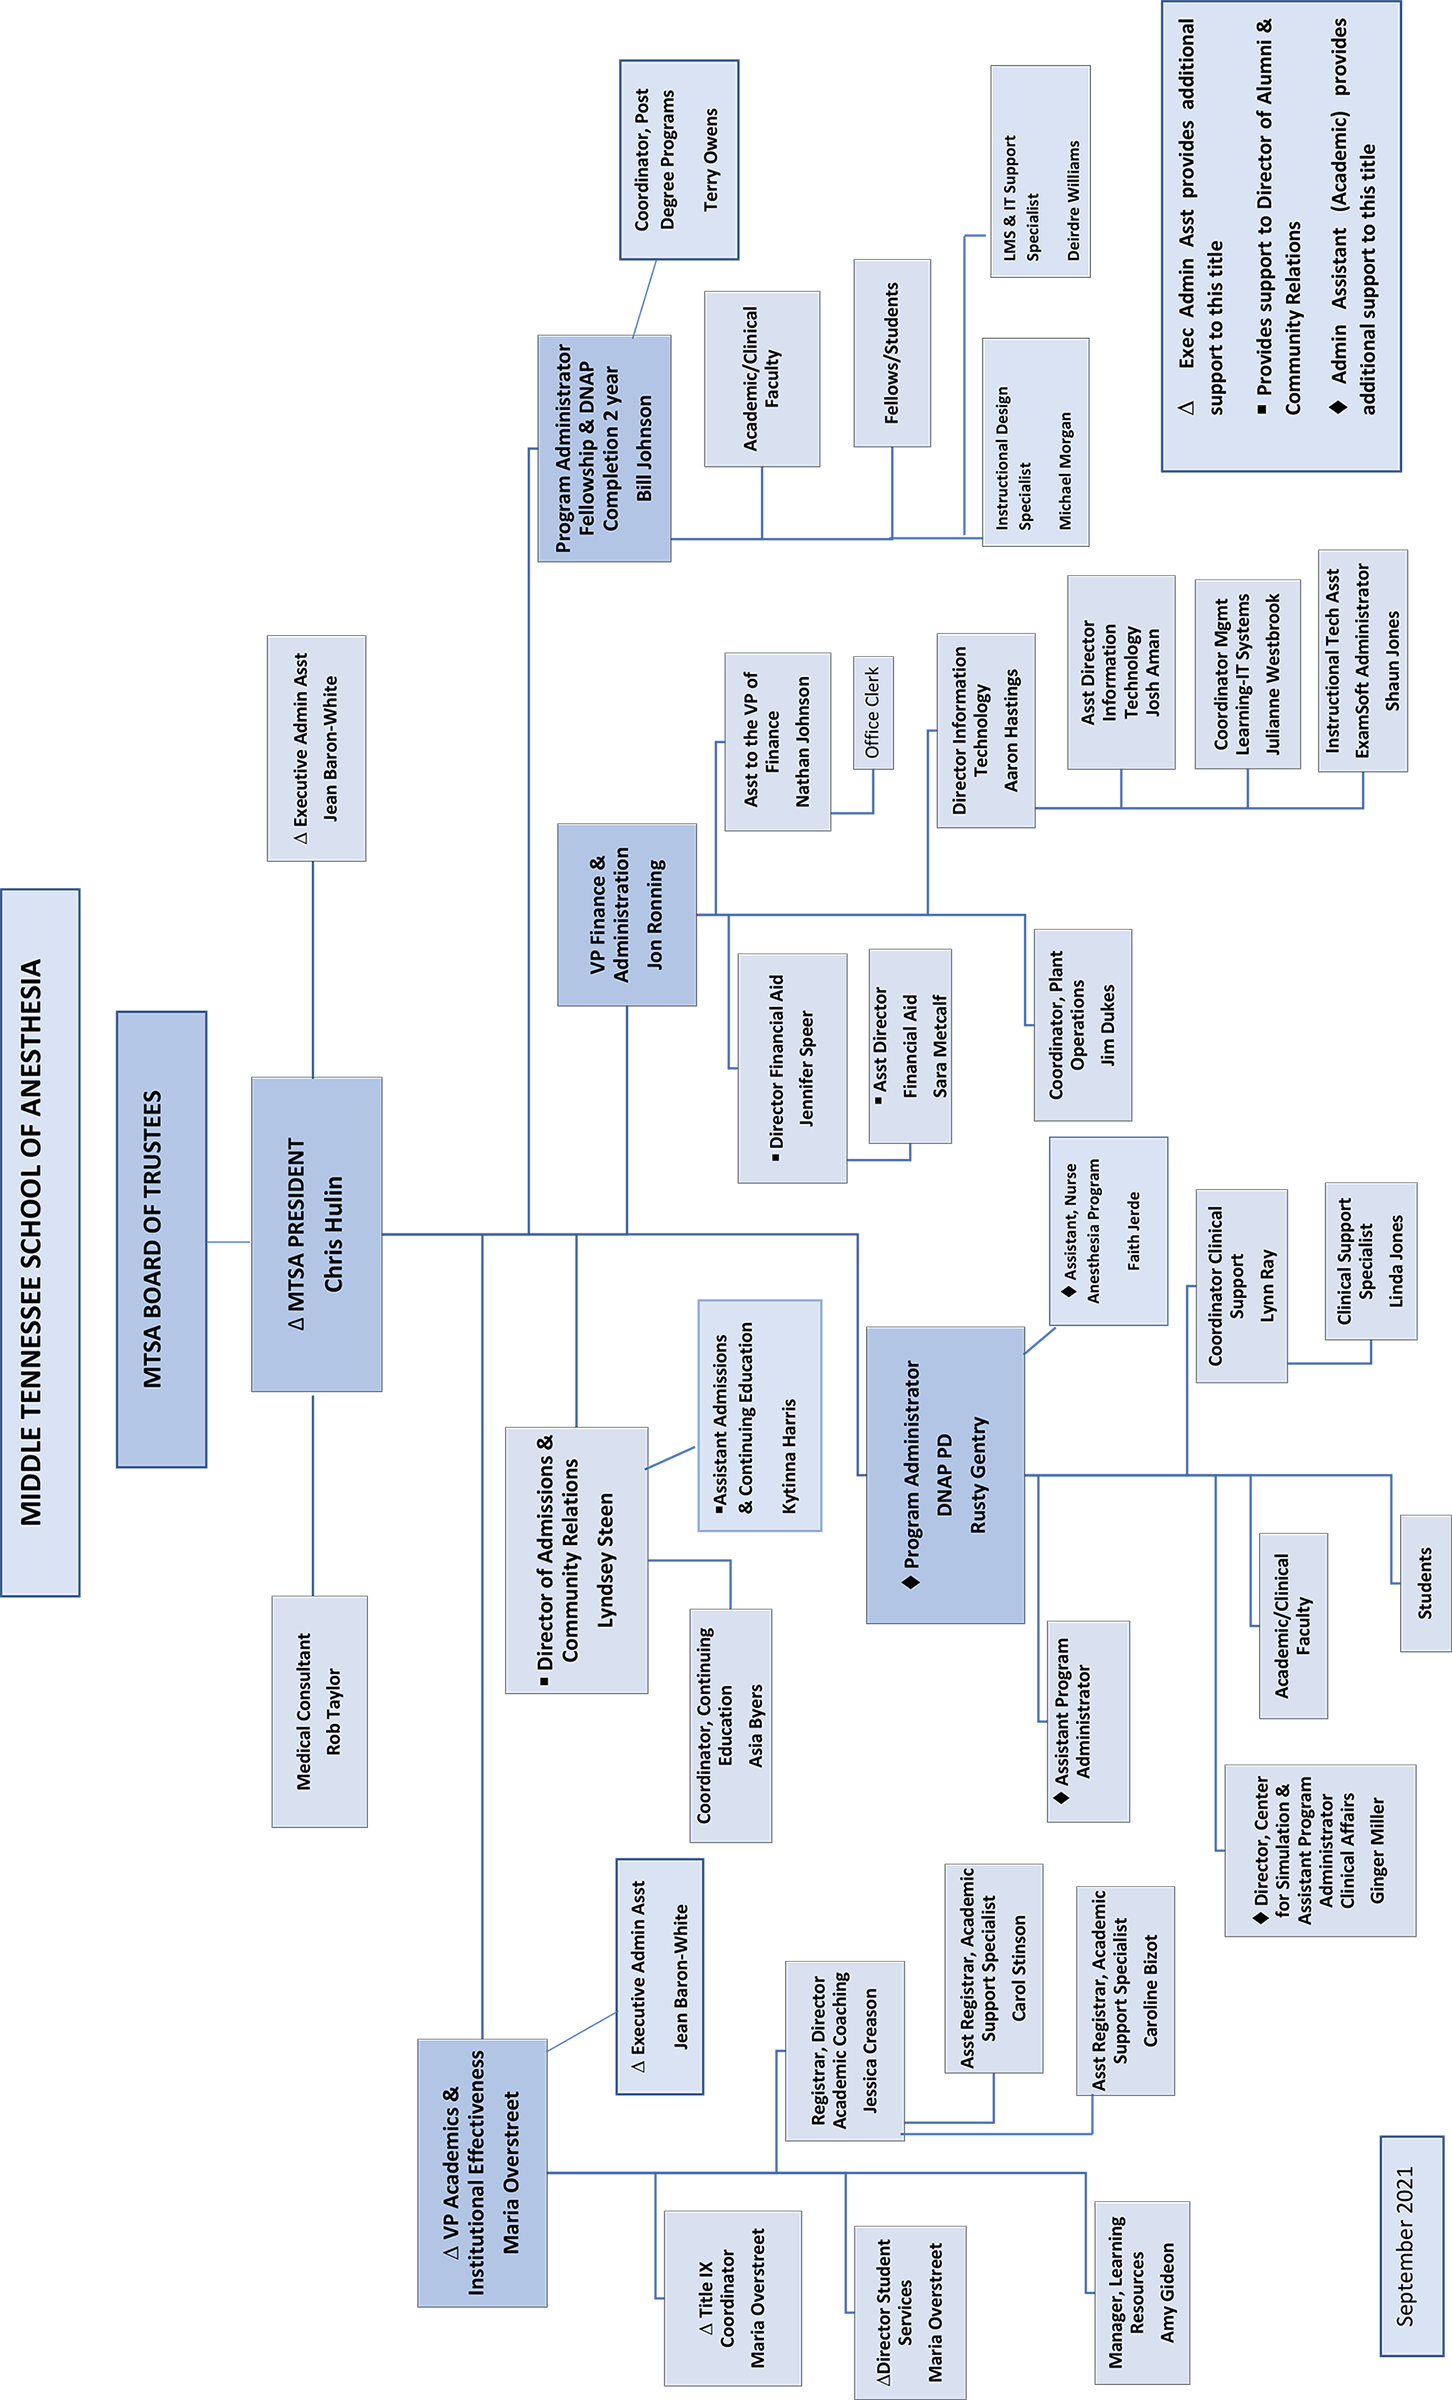 MTSA Organizational Flow Chart